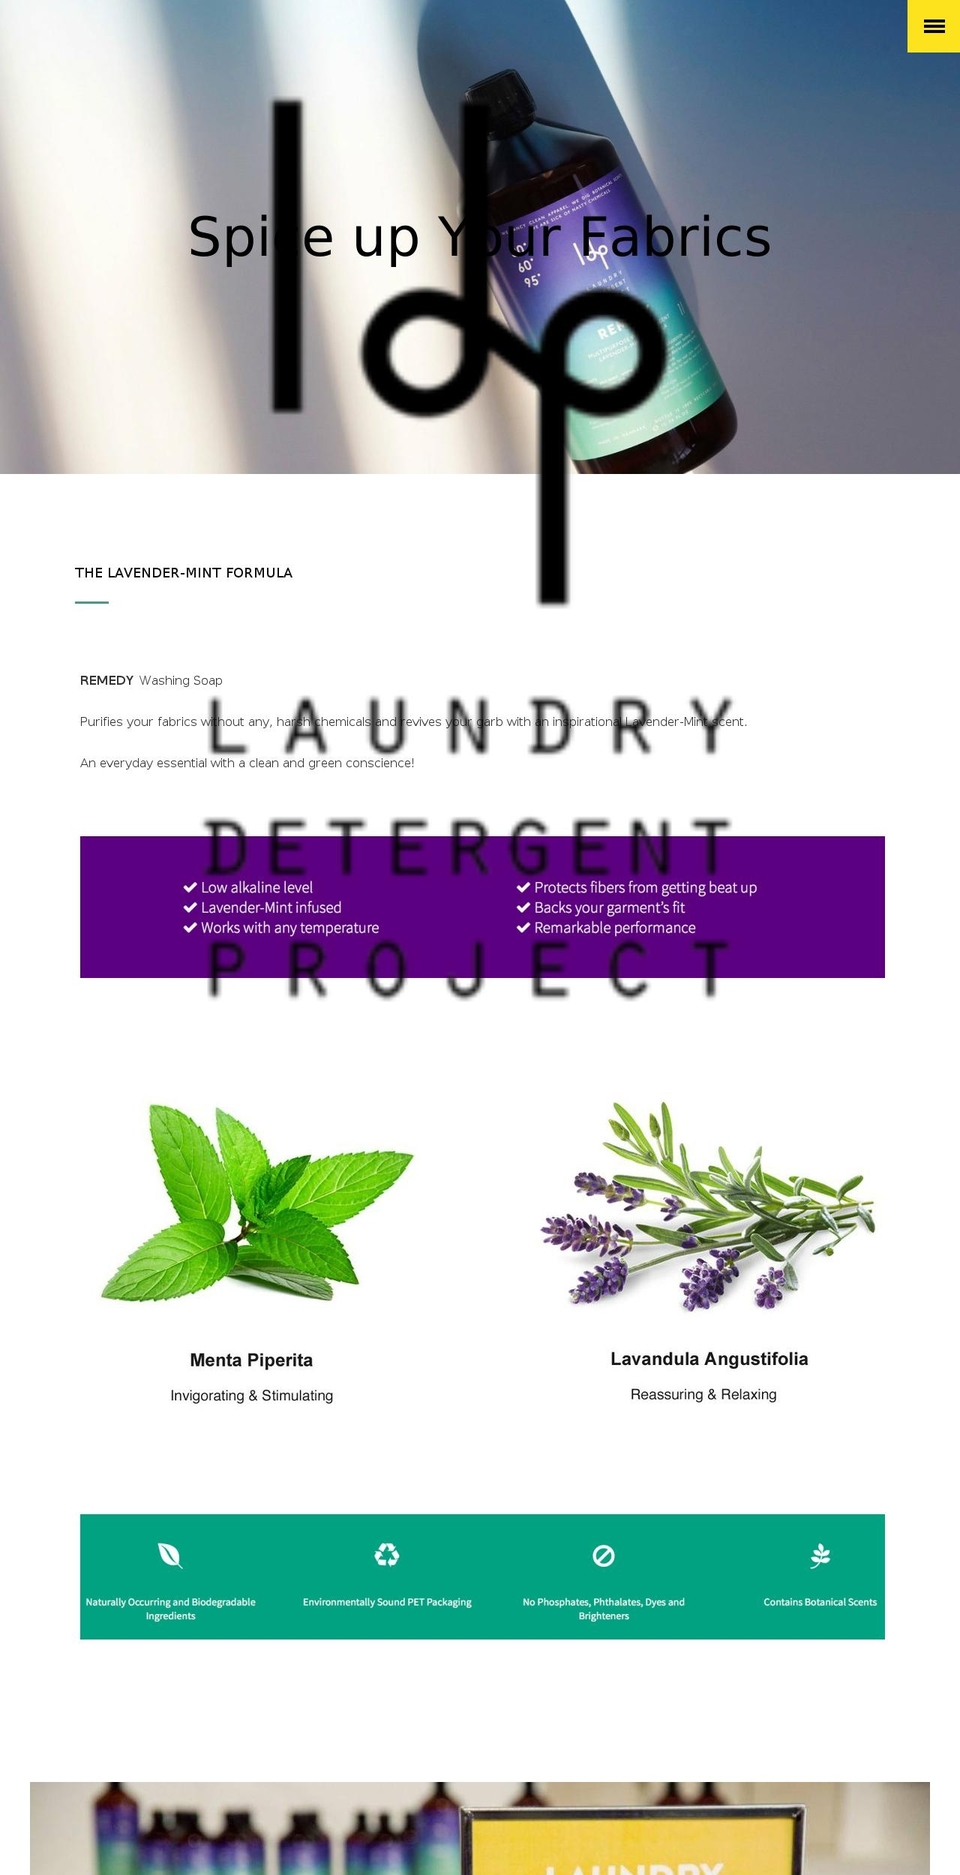 laundrydetergentproject.com shopify website screenshot